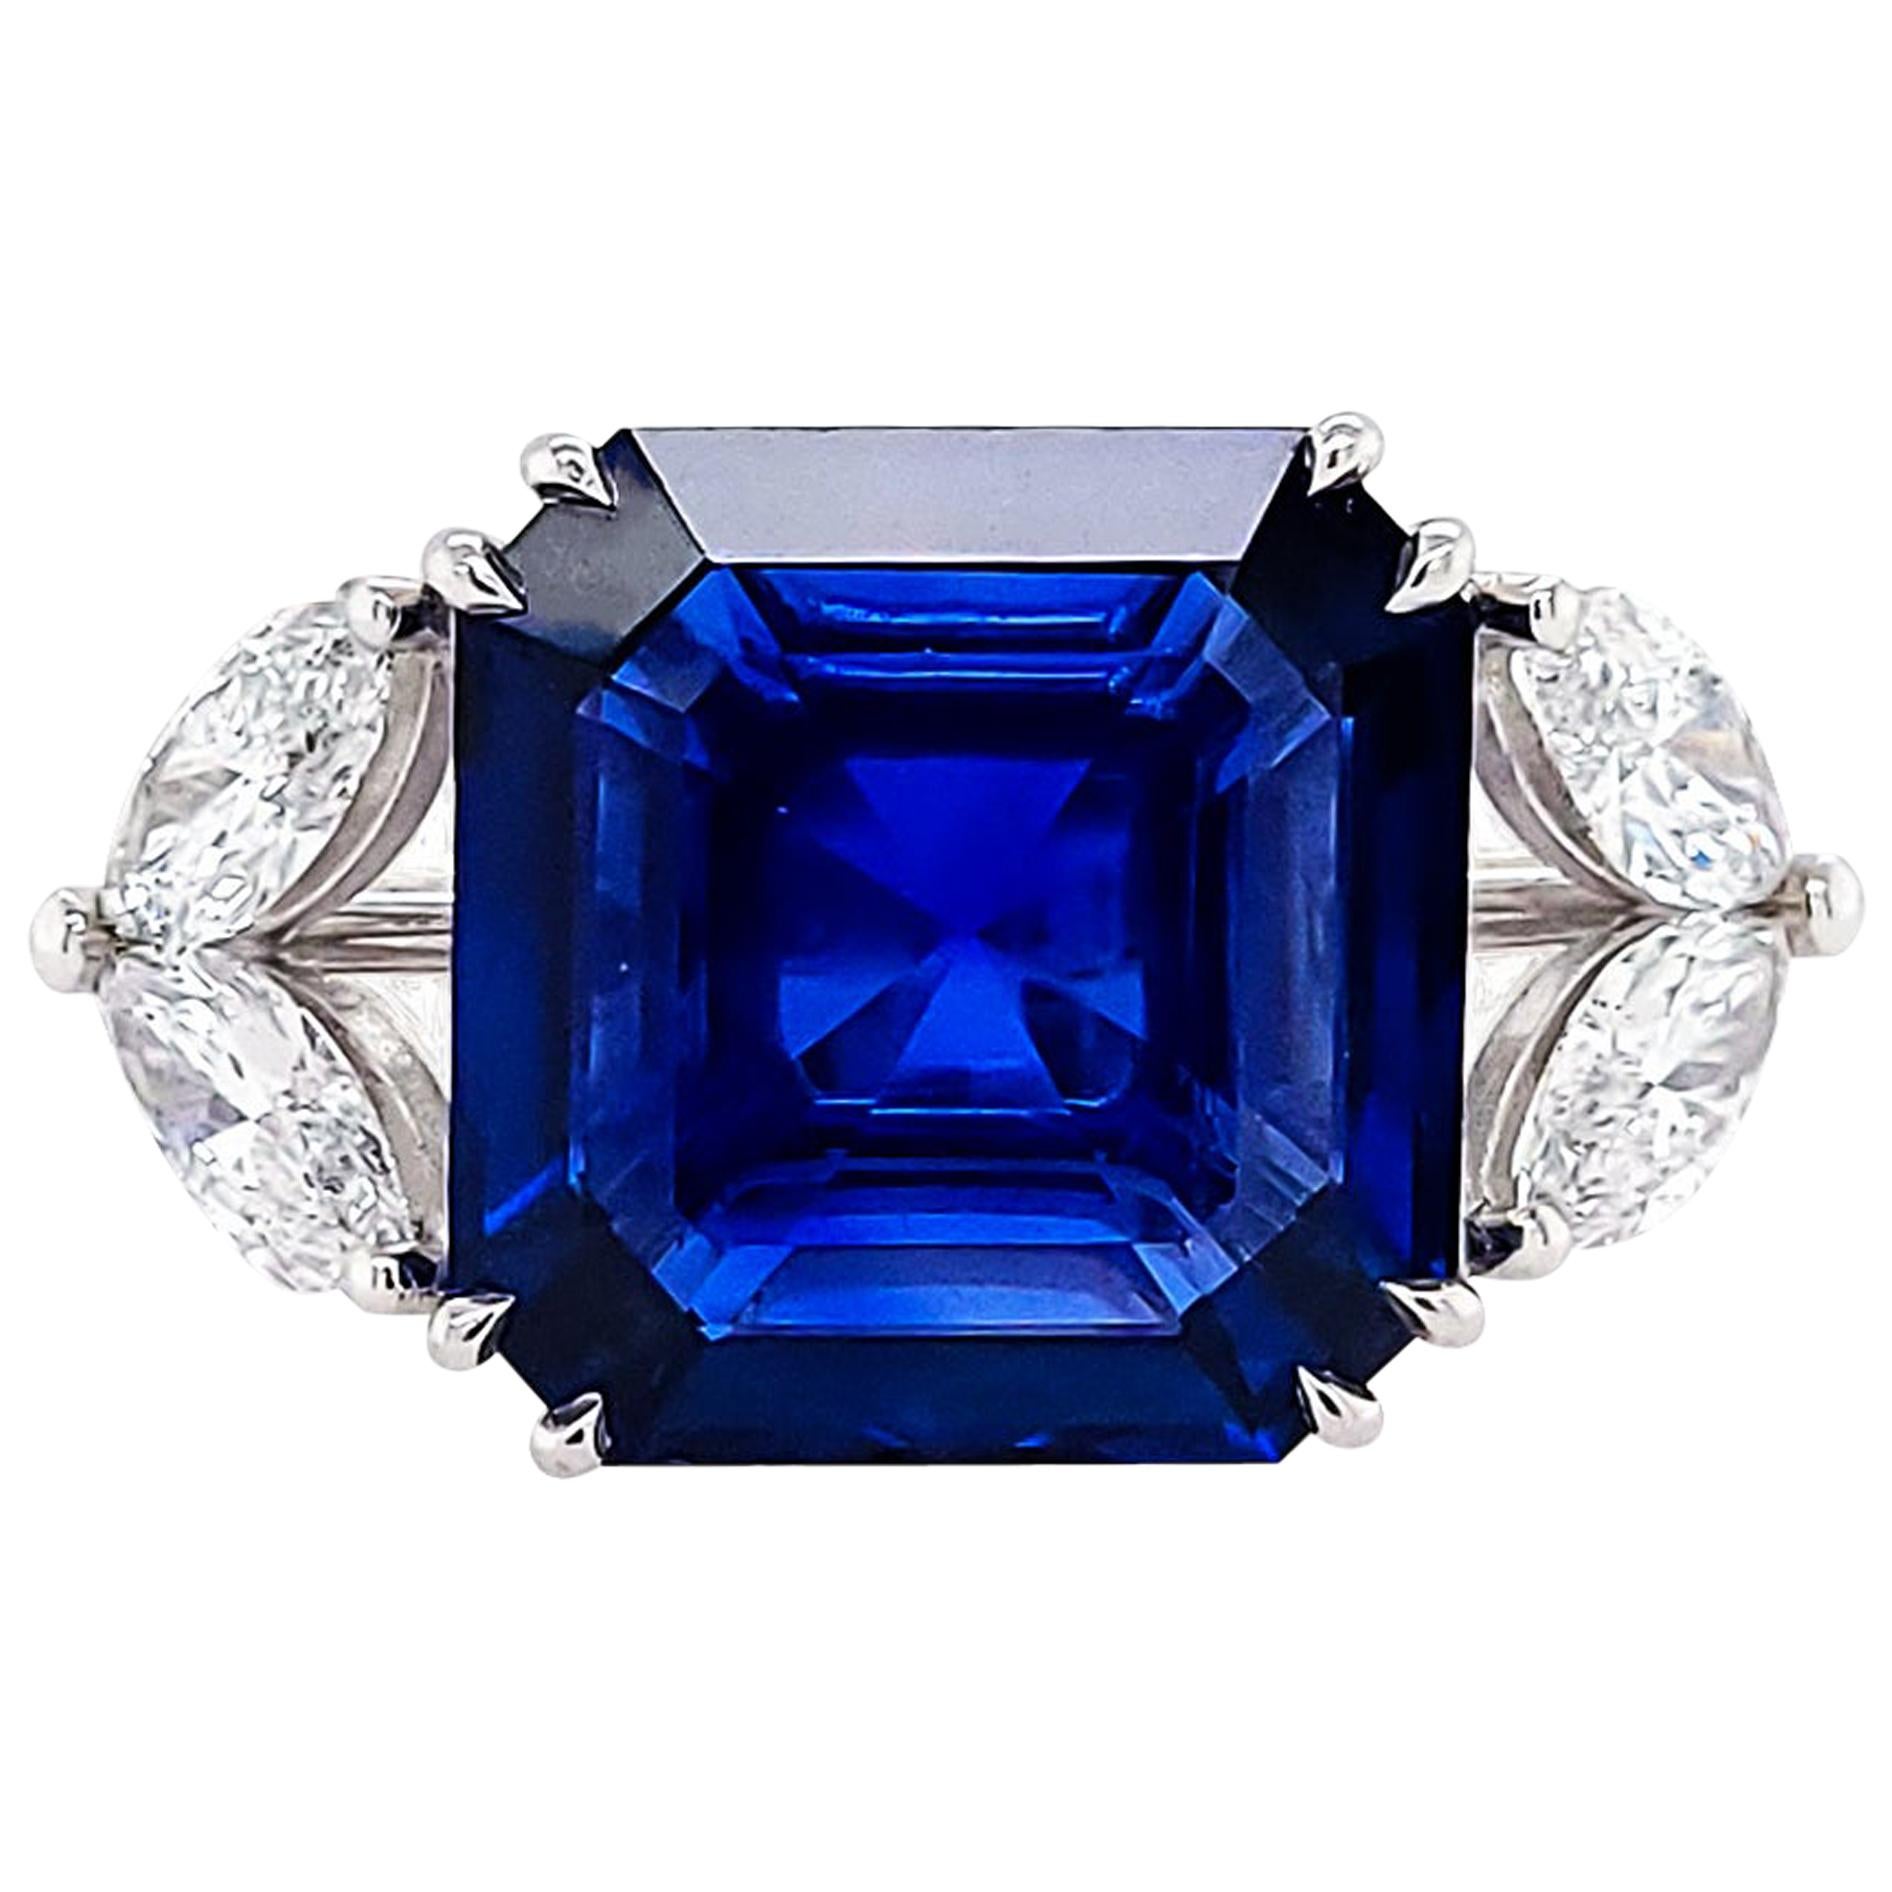 Bague Spectra Fine Jewelry certifiée SSEF avec saphir de Birmanie de 10 carats et diamants